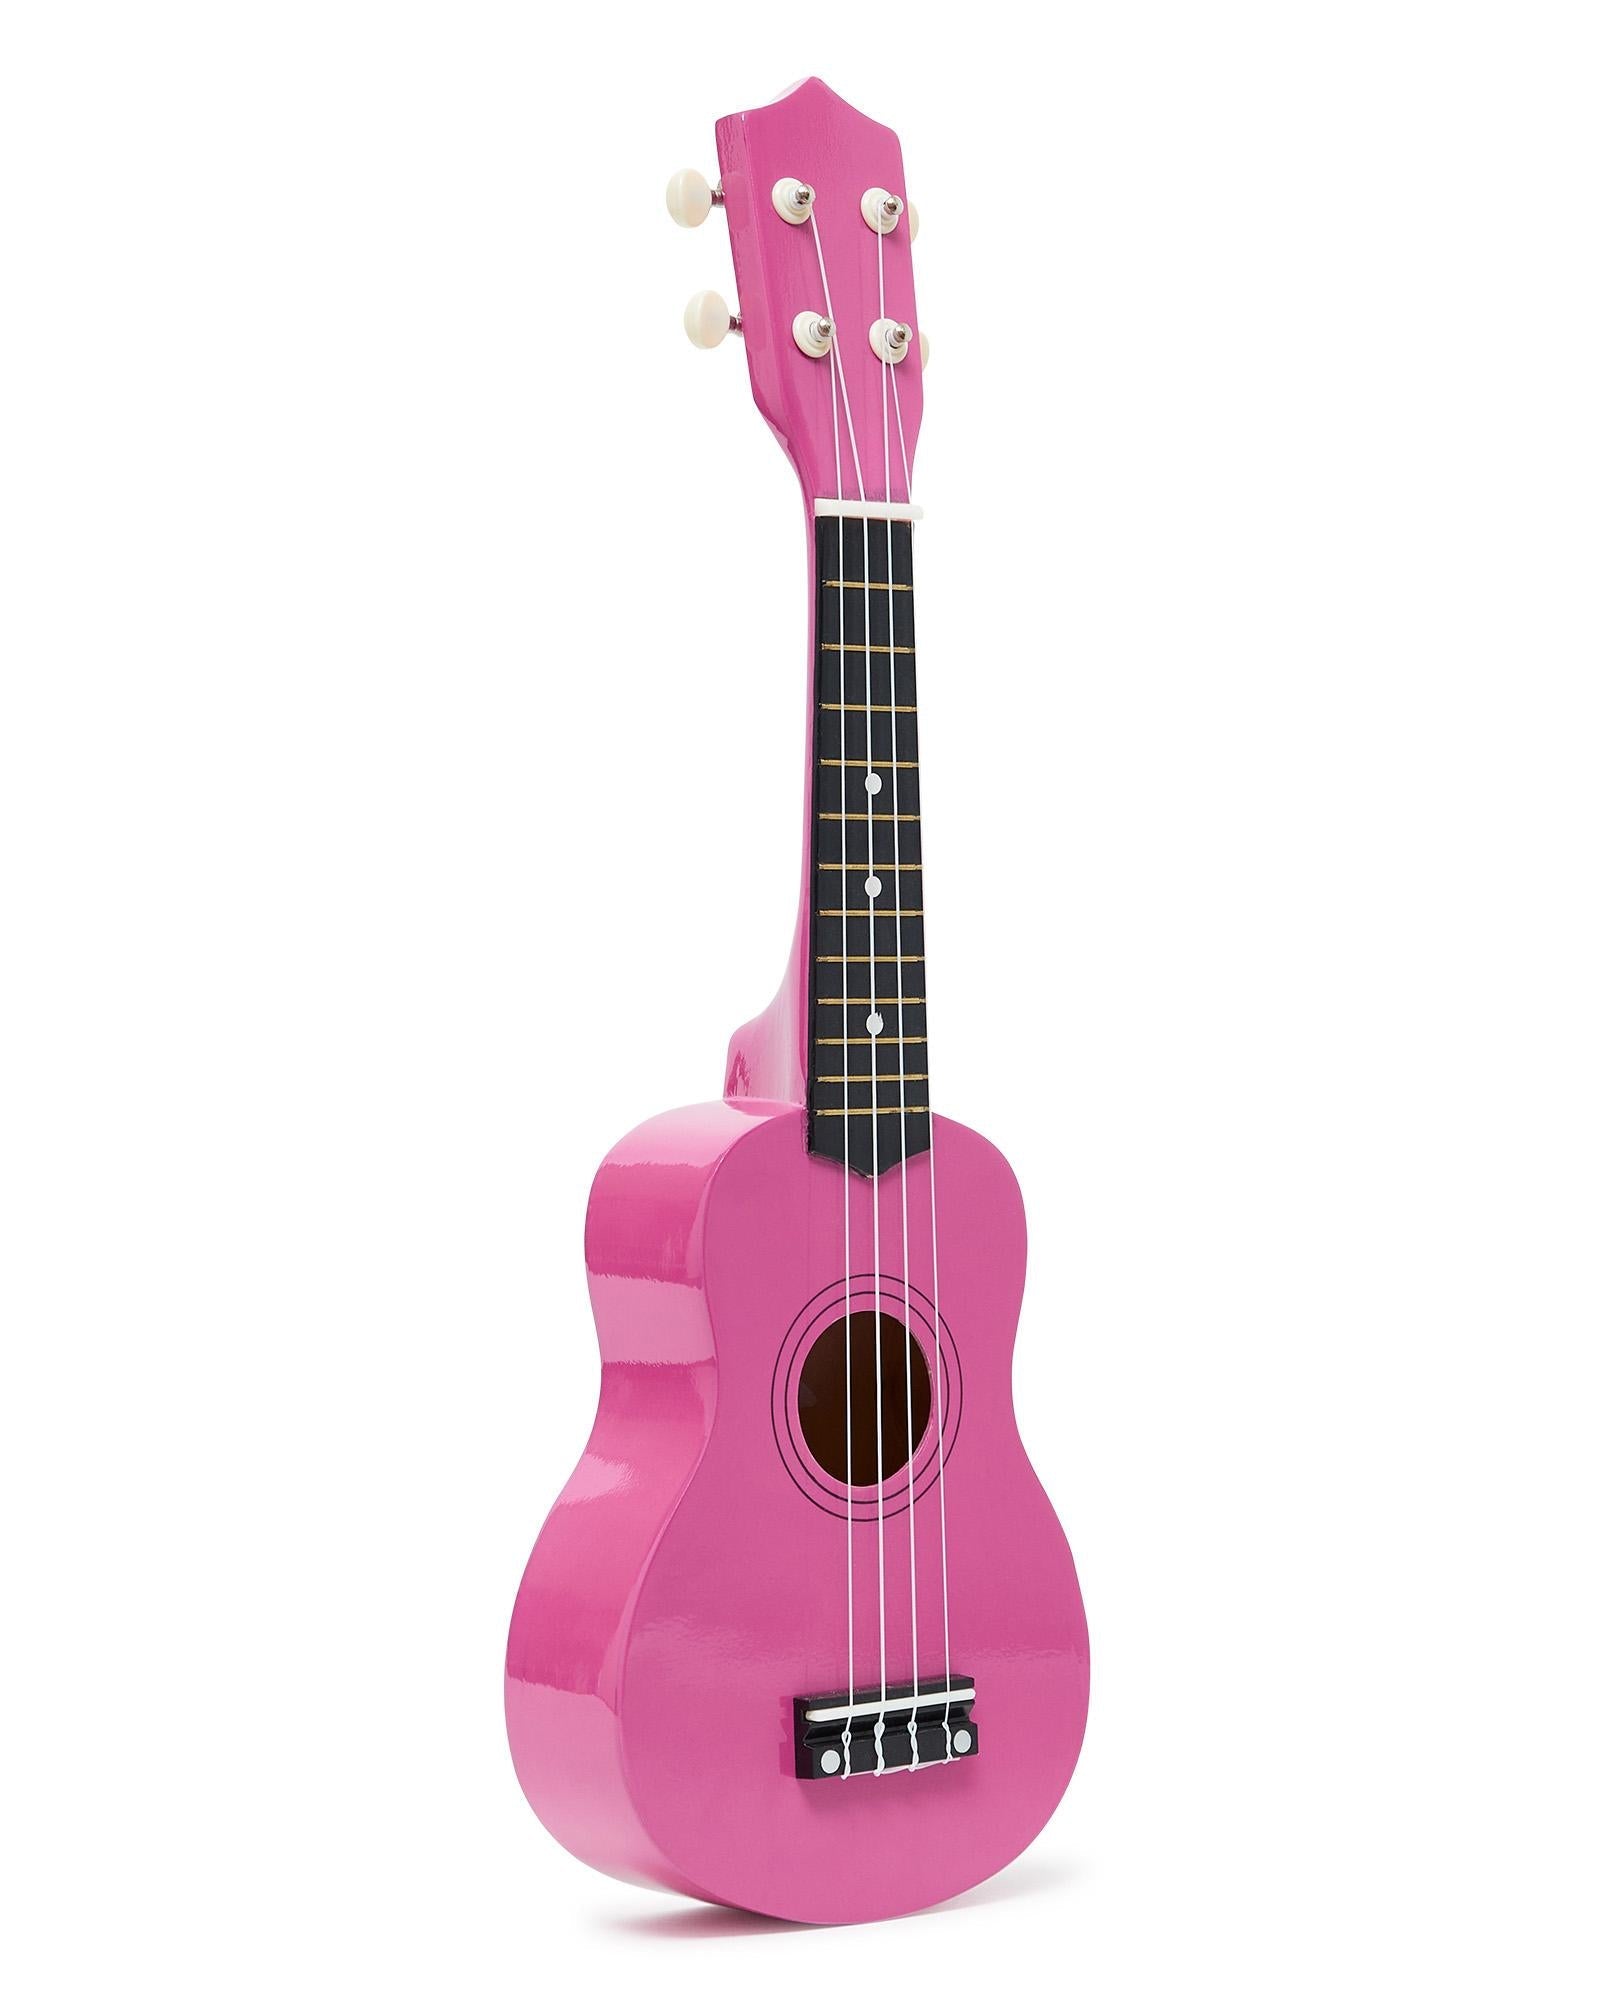 Guitare rose créole – Bonton Paris